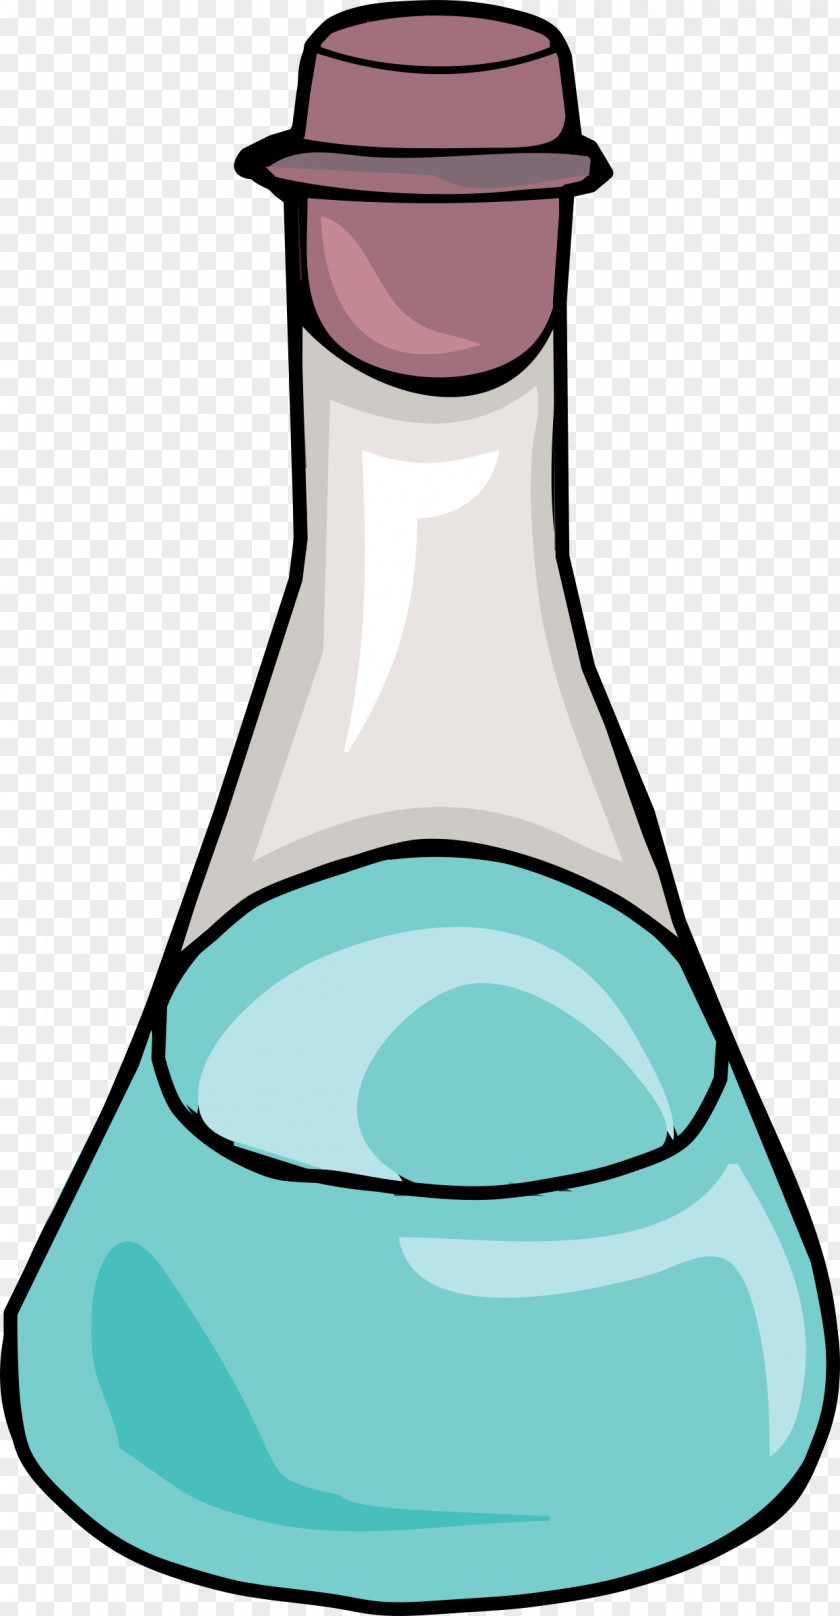 Scientist Science Laboratory Flasks Beaker Clip Art PNG